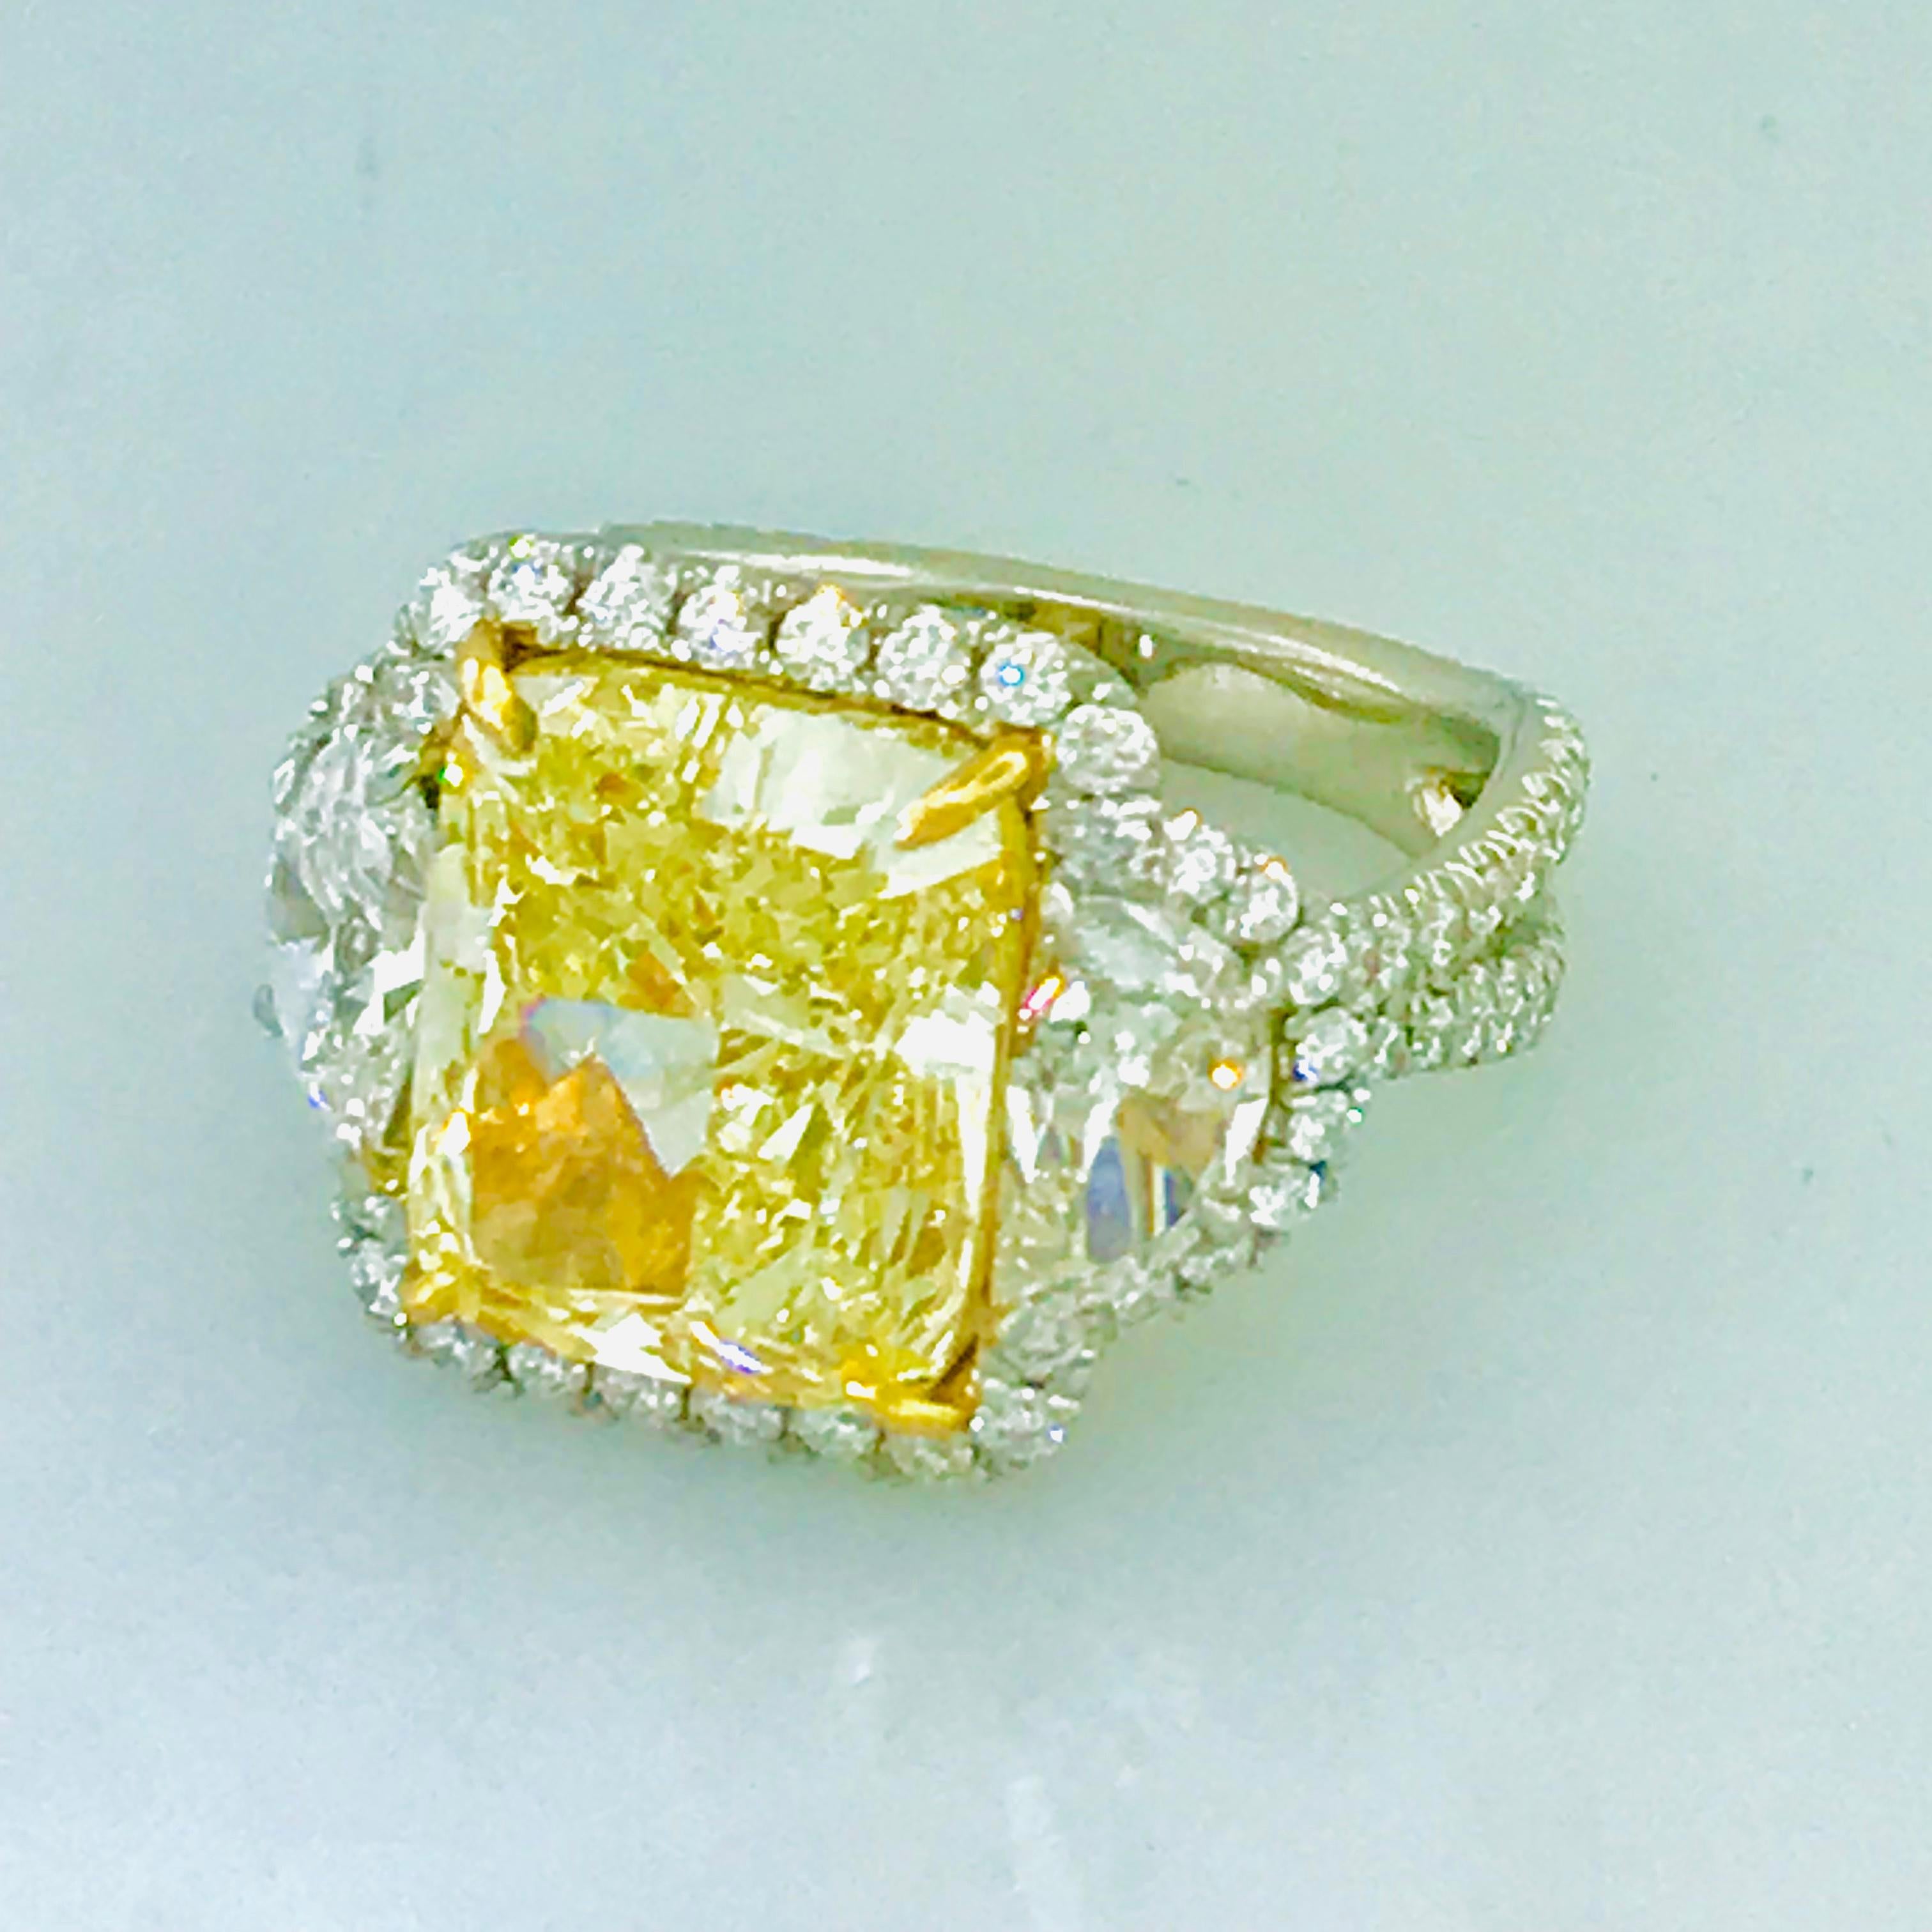 9 carat yellow diamond ring